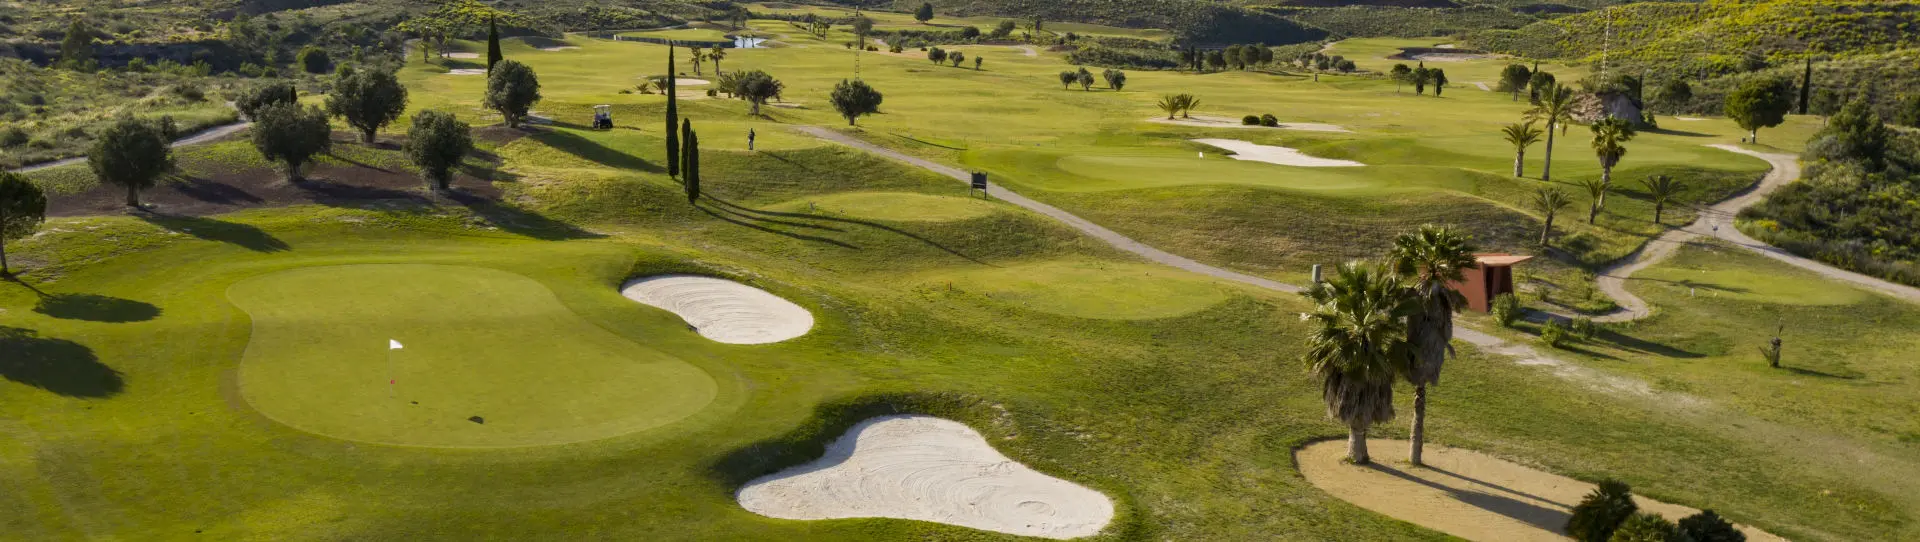 Spain golf courses - Lorca Golf Course - Photo 1